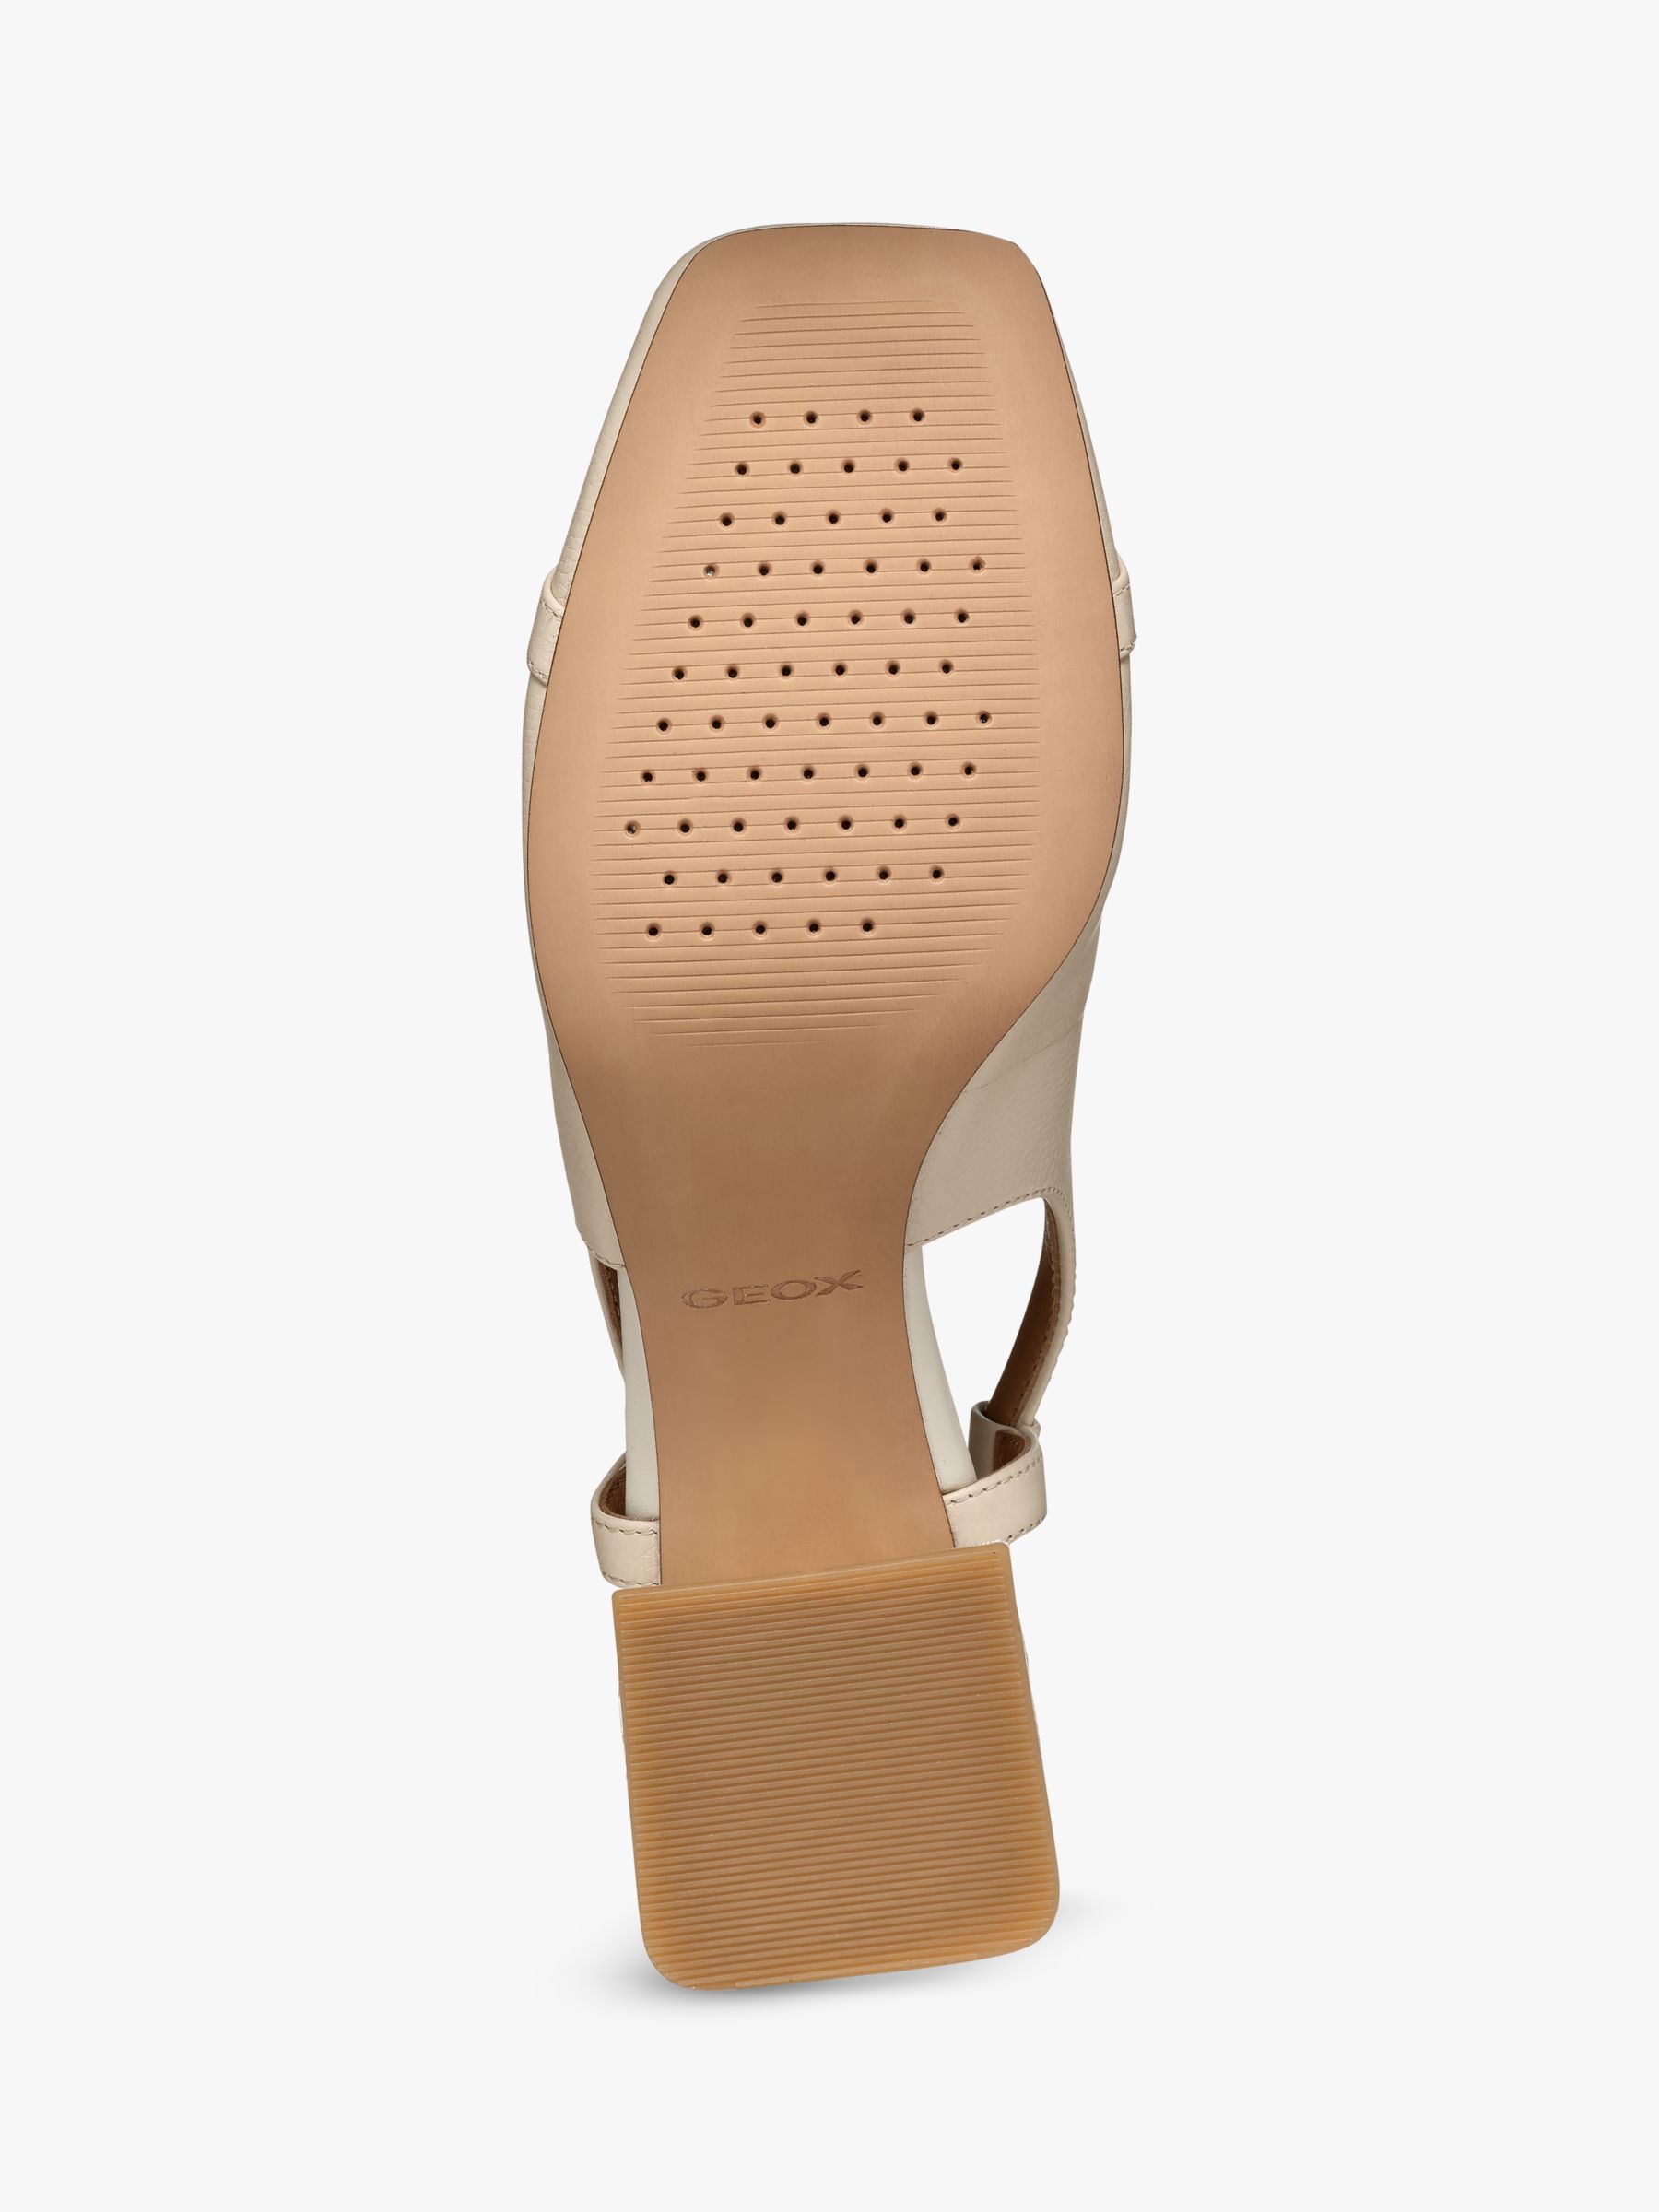 Geox Coronilla Square Toe Leather Slingback Court Shoes, Light Sand, EU36